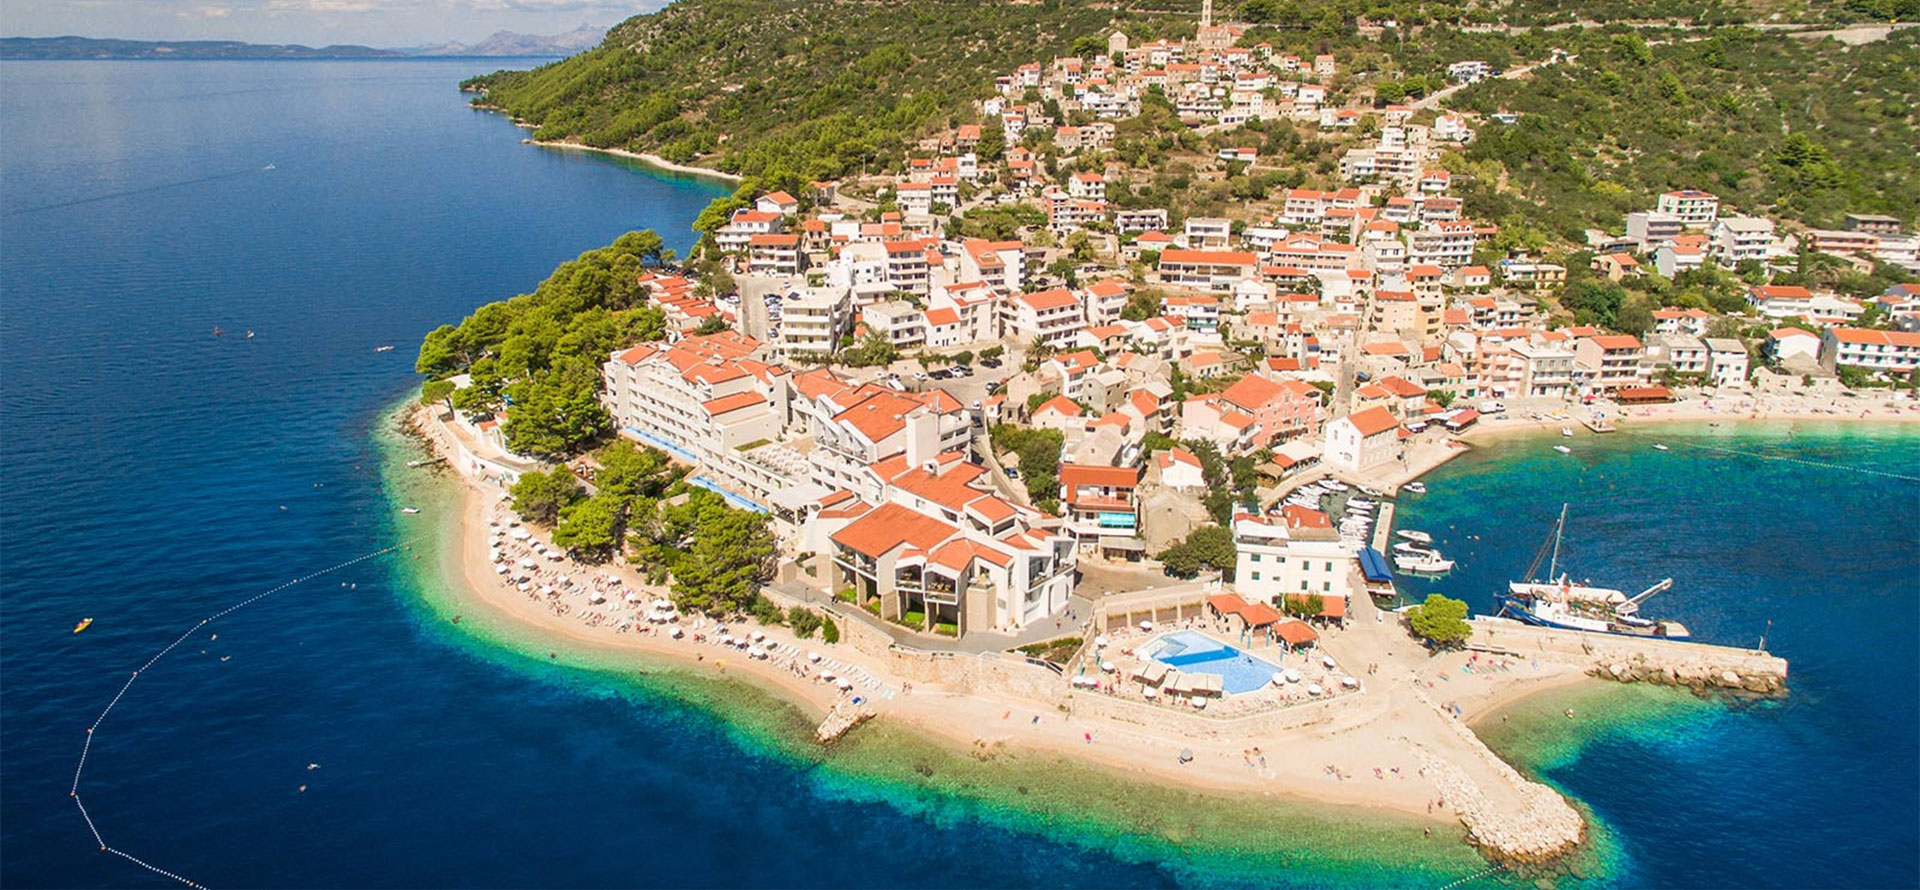 Croatia all inclusive resorts top view.